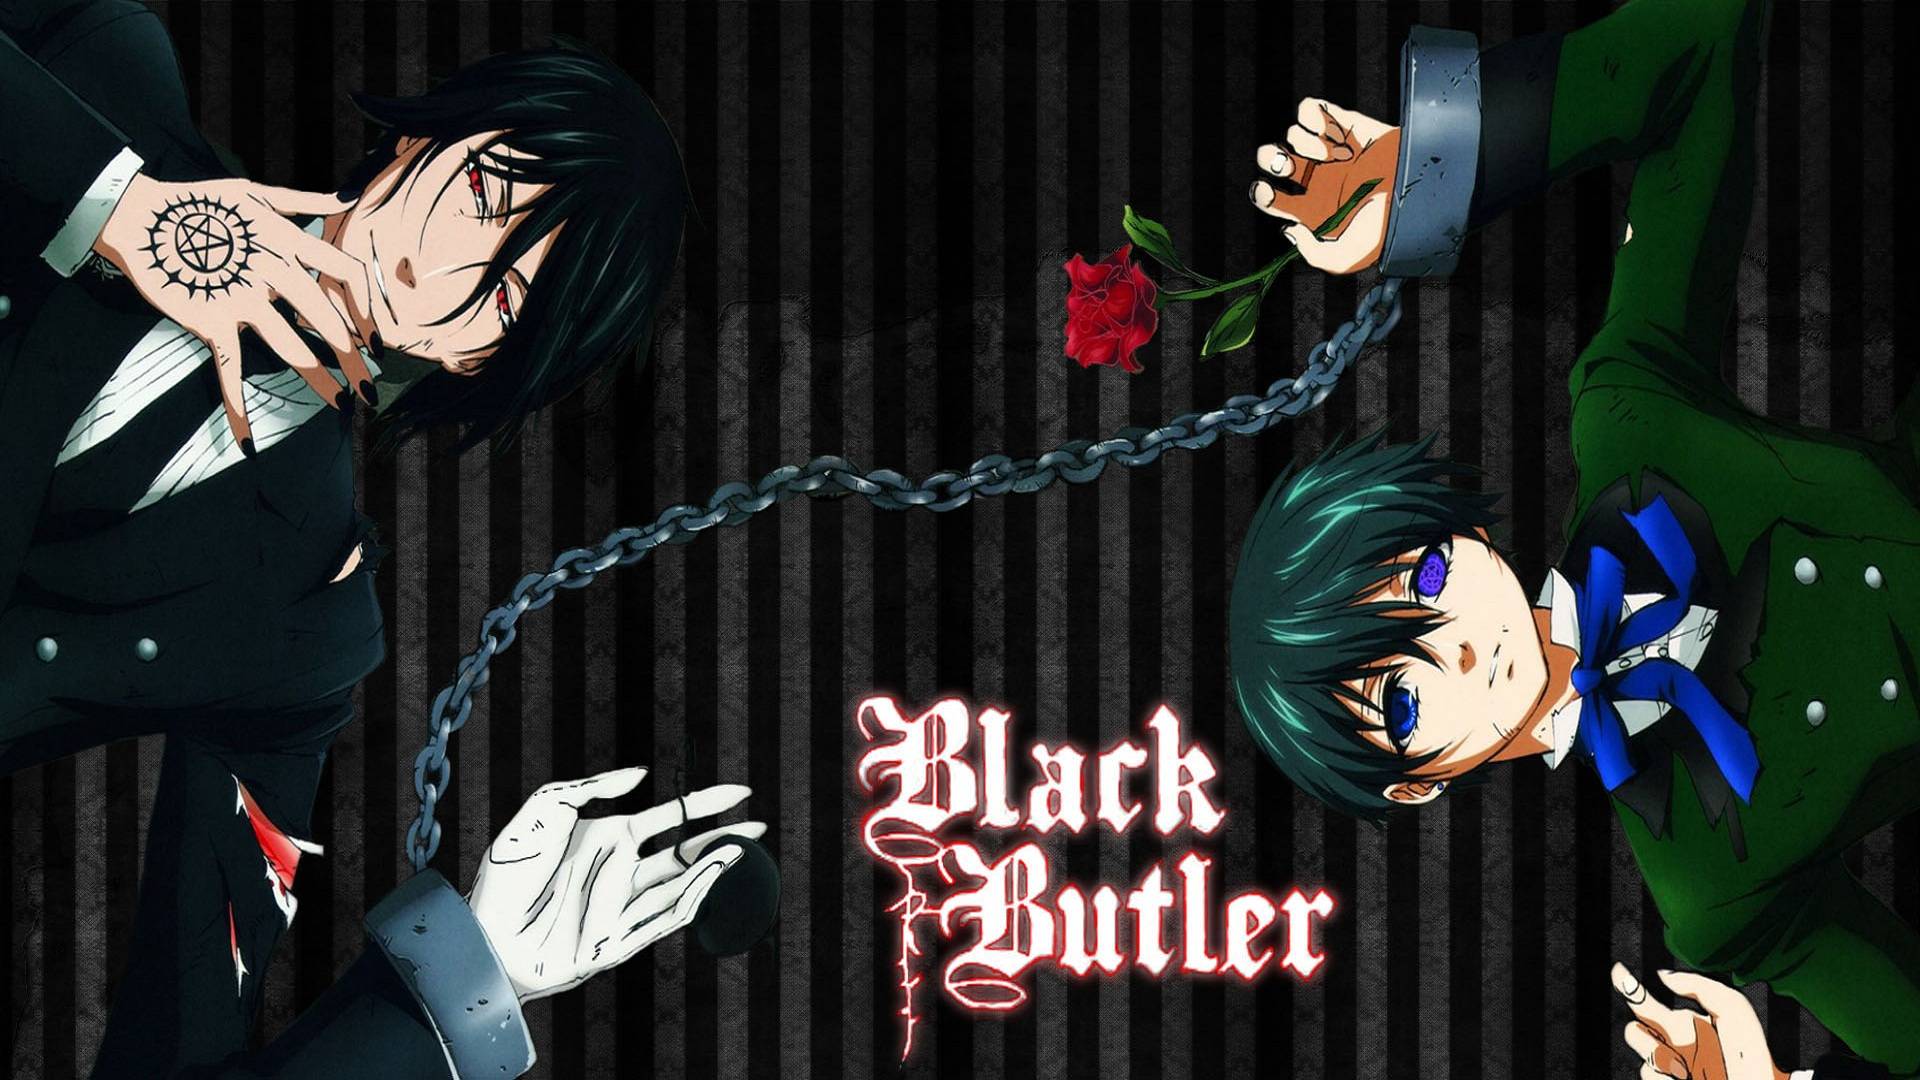 Outstanding Black Butler Wallpaper 1024x768PX Black Butler